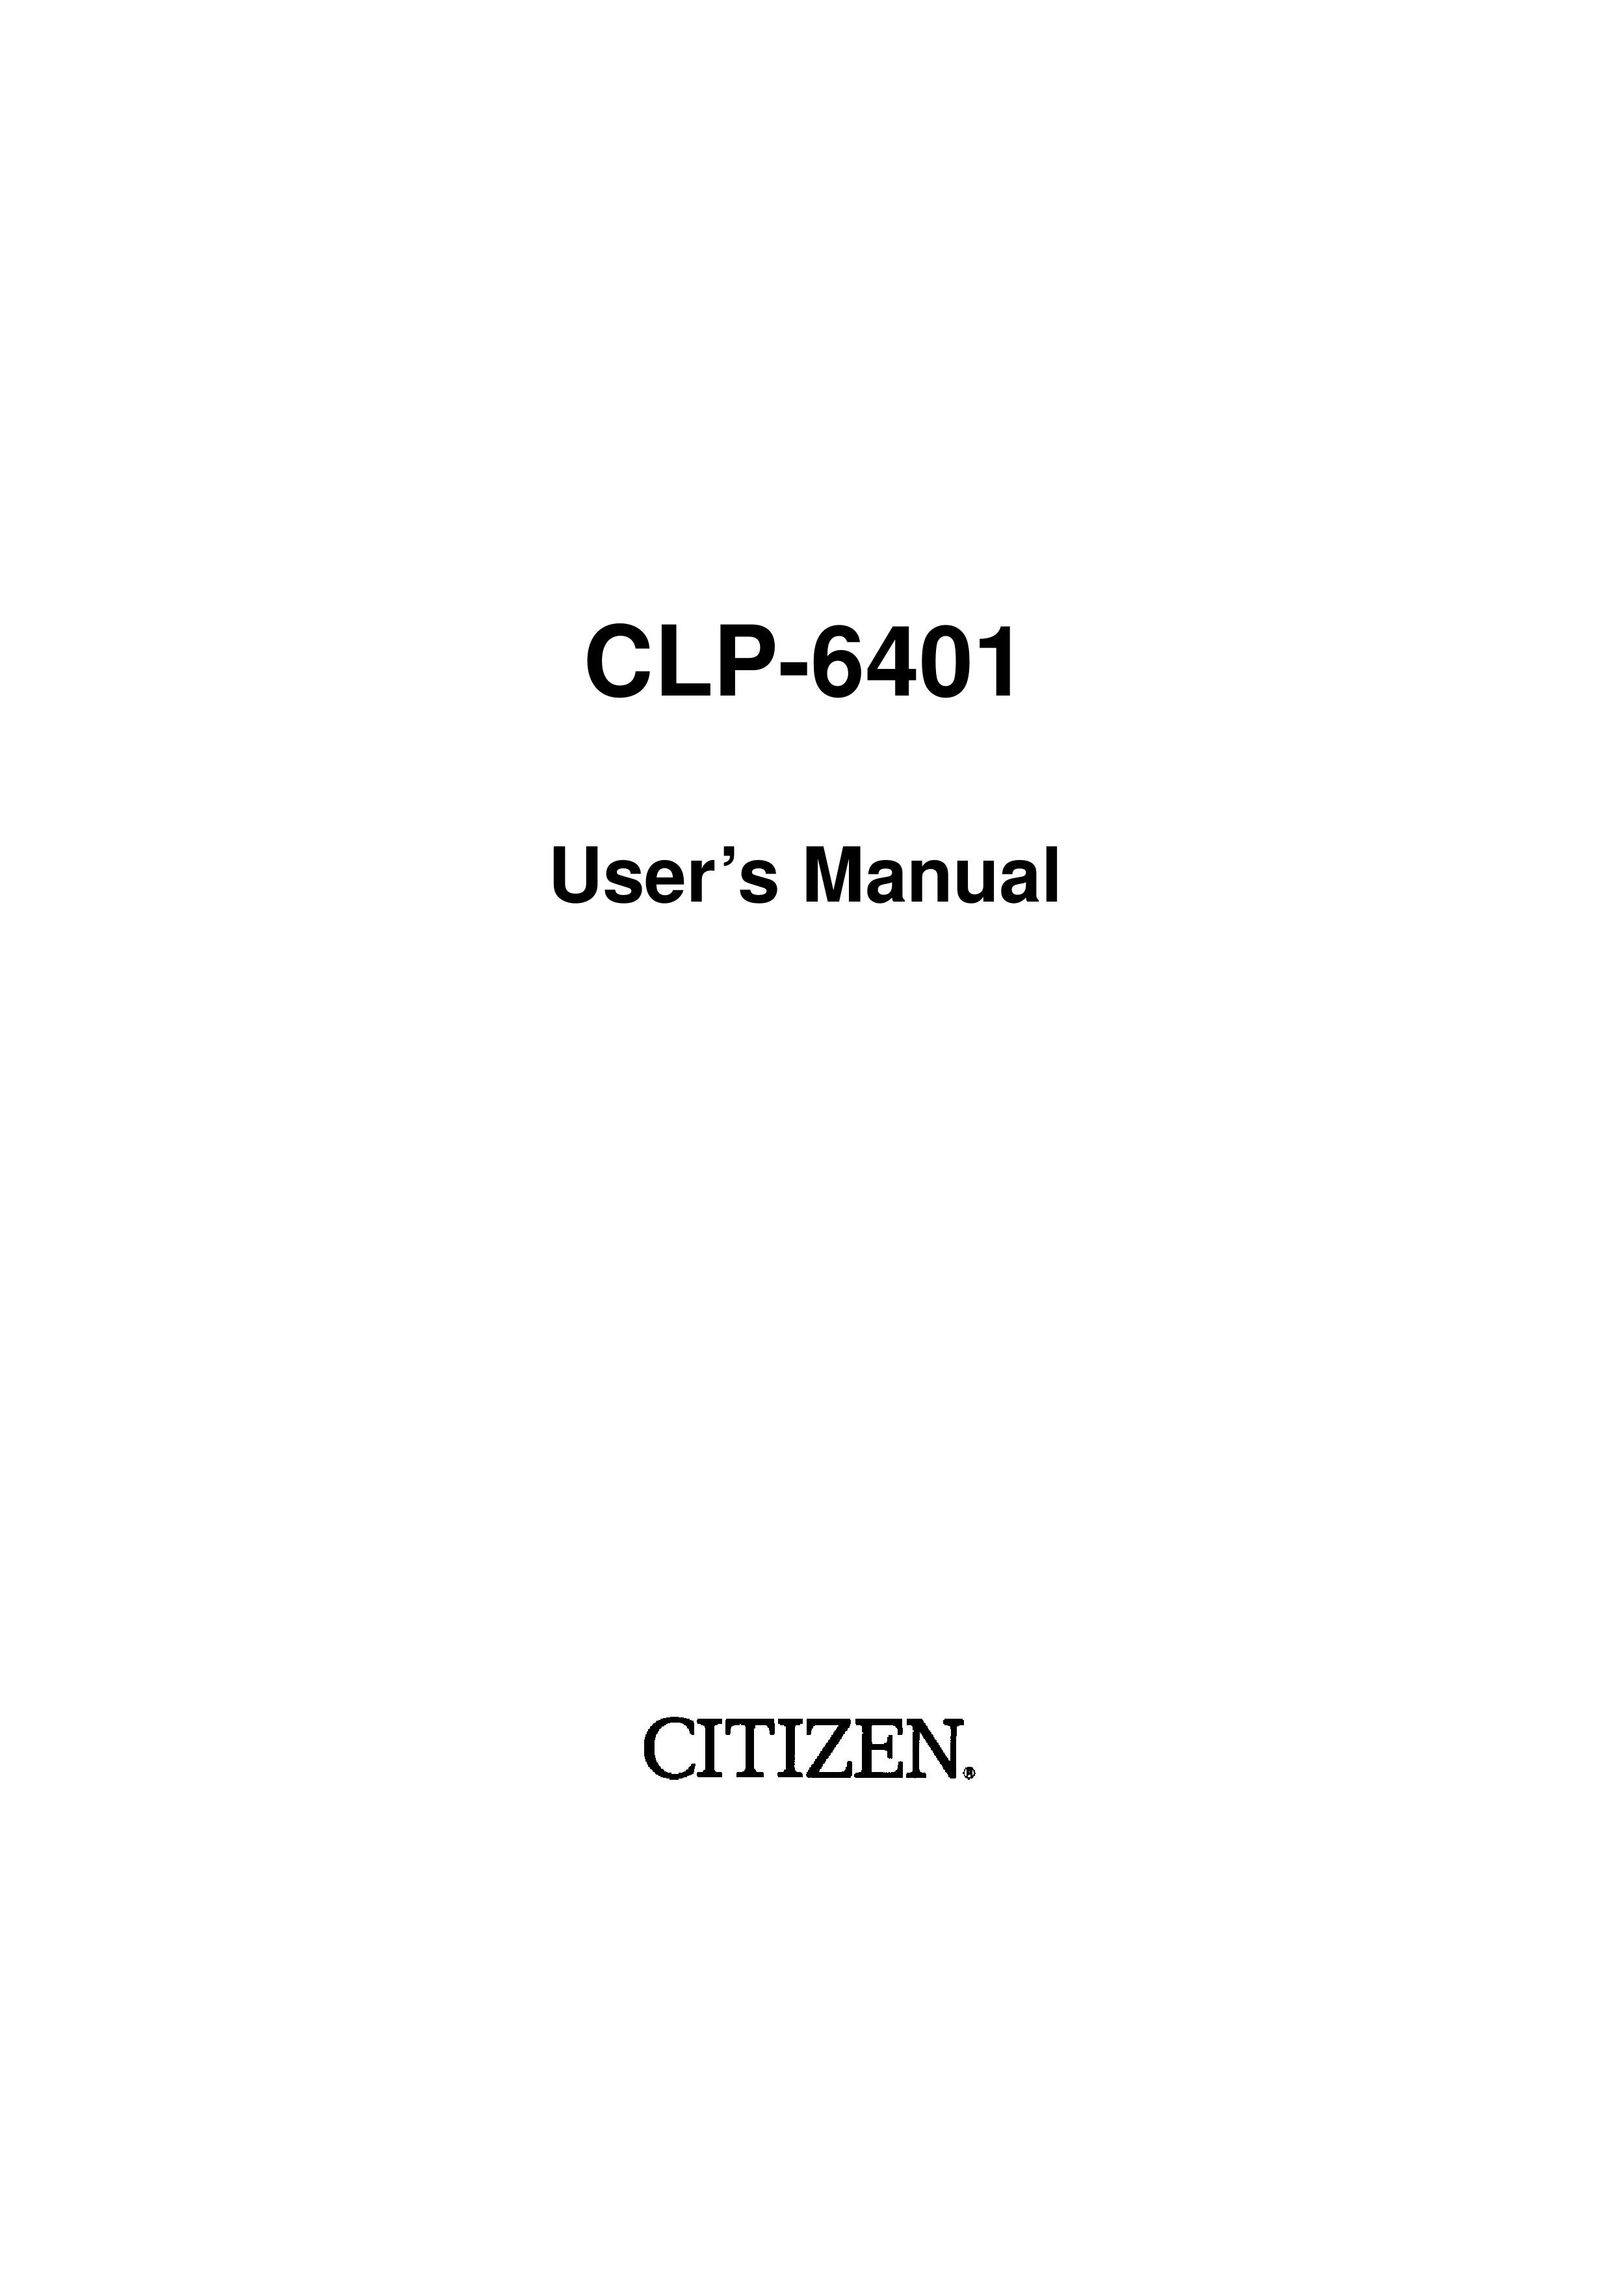 Citizen Systems CLP-6401 Printer User Manual